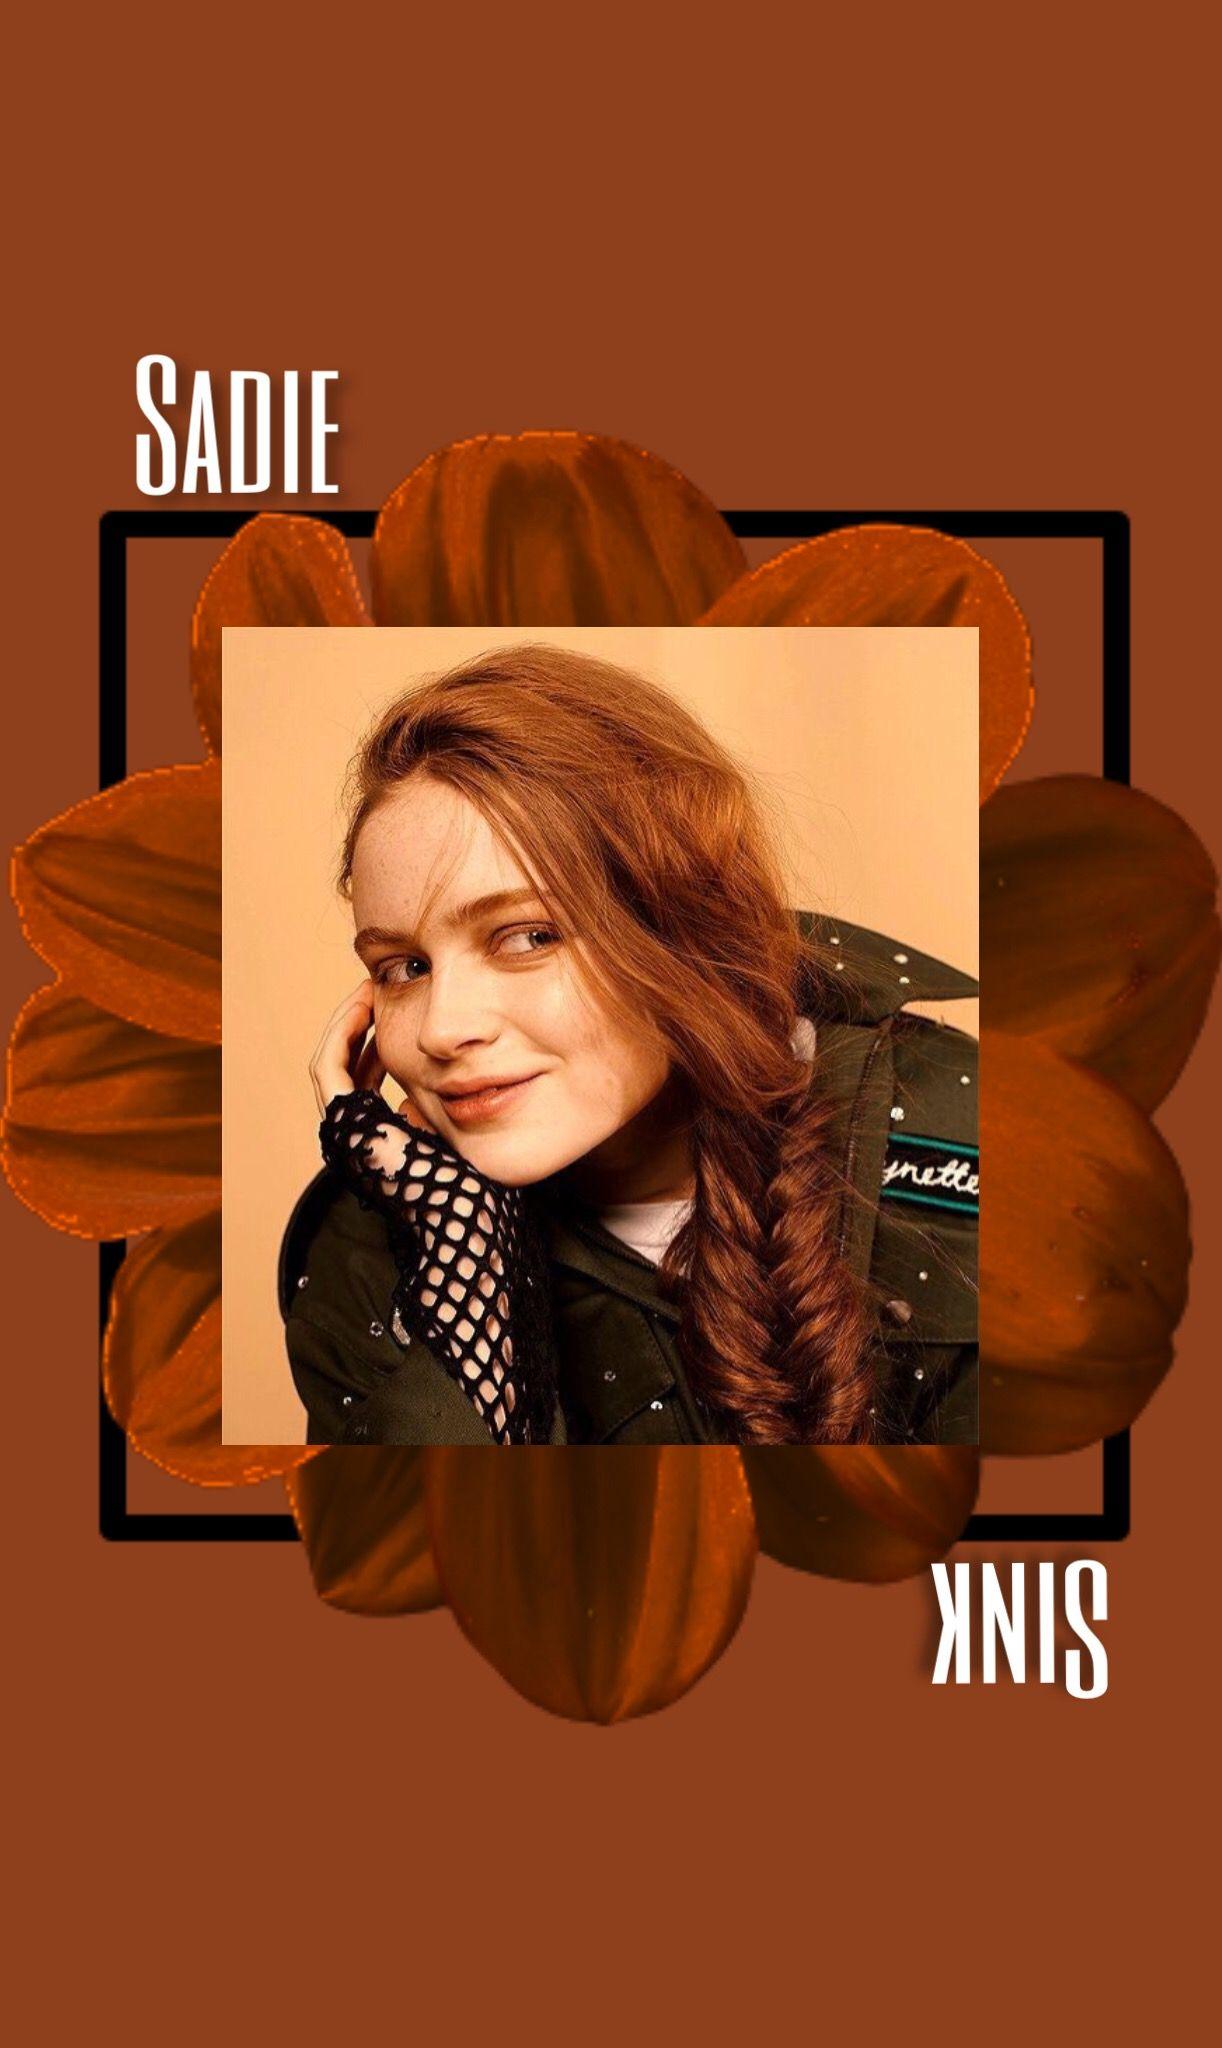 Sadie Sink 2019 Wallpaper